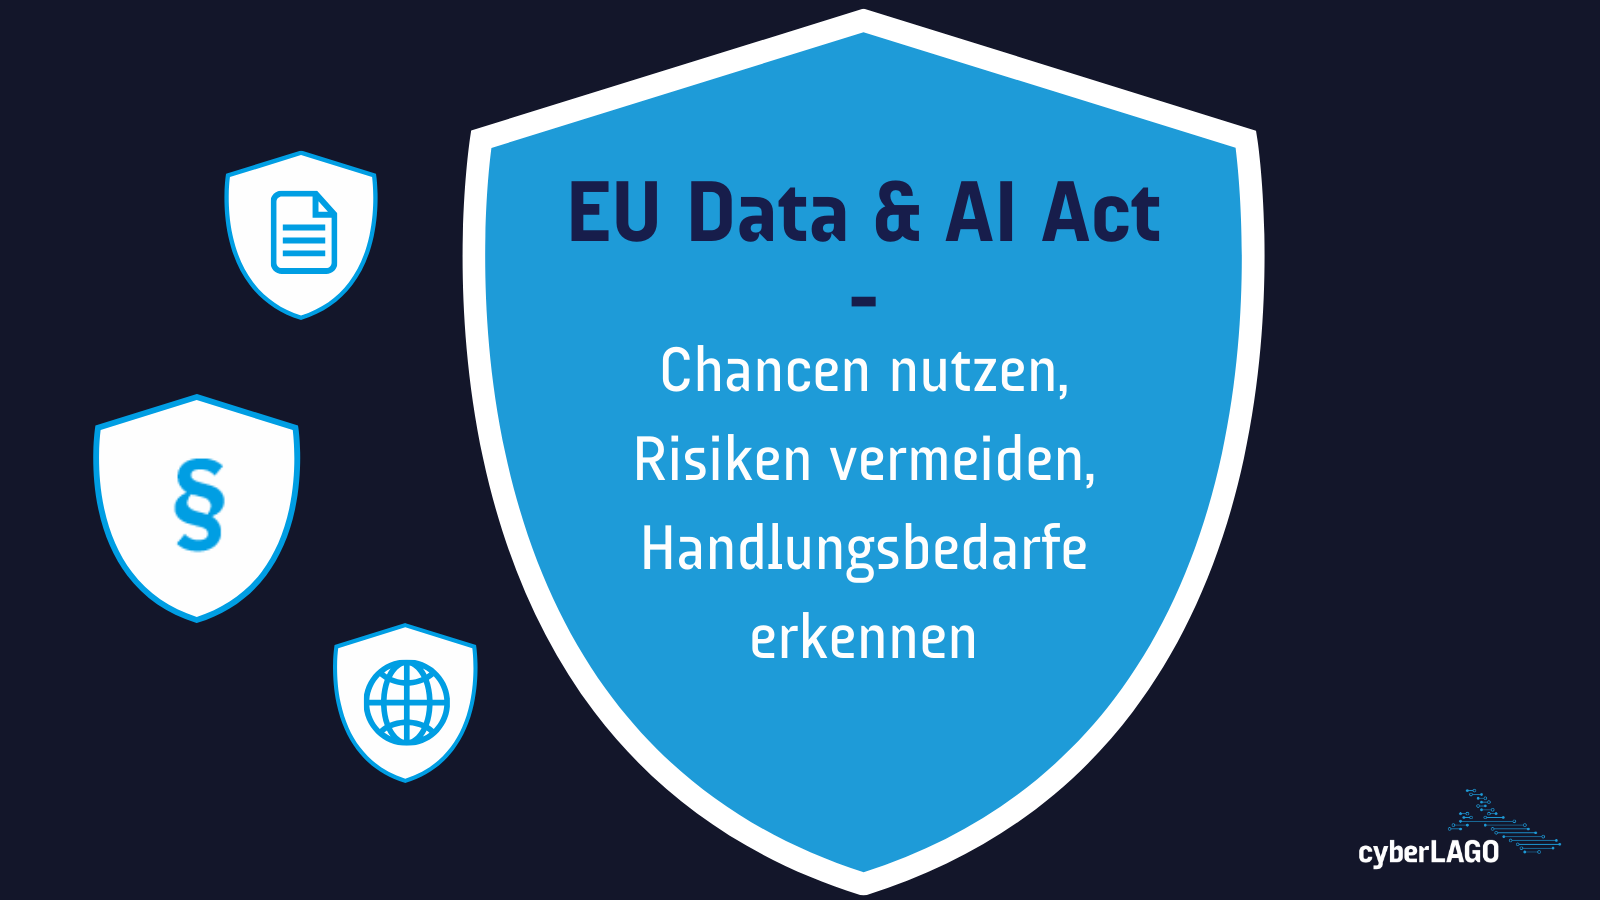 EU Data & AI Act: Chancen nutzen, Risiken vermeiden, Handlungsbedarf erkennen